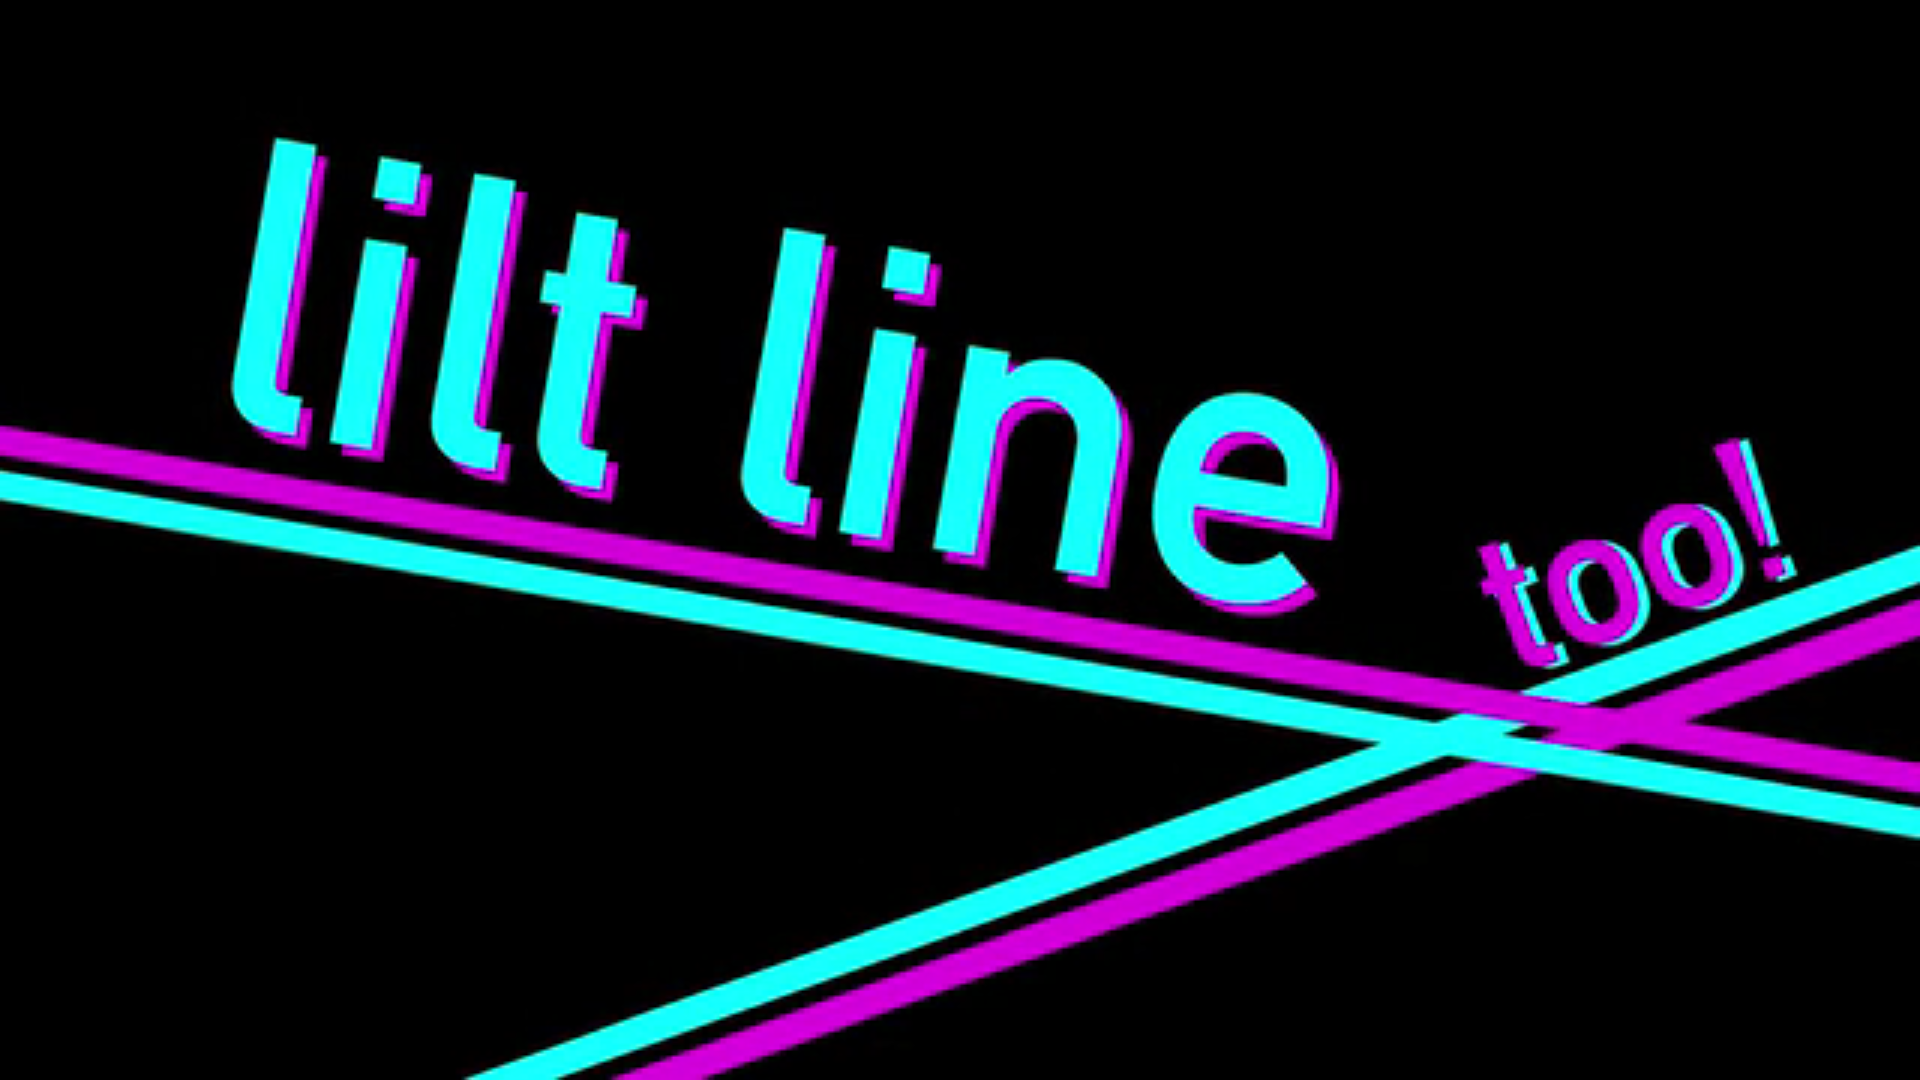 lilt line too! Kickstarter Has Added Wii U Stretch Goal